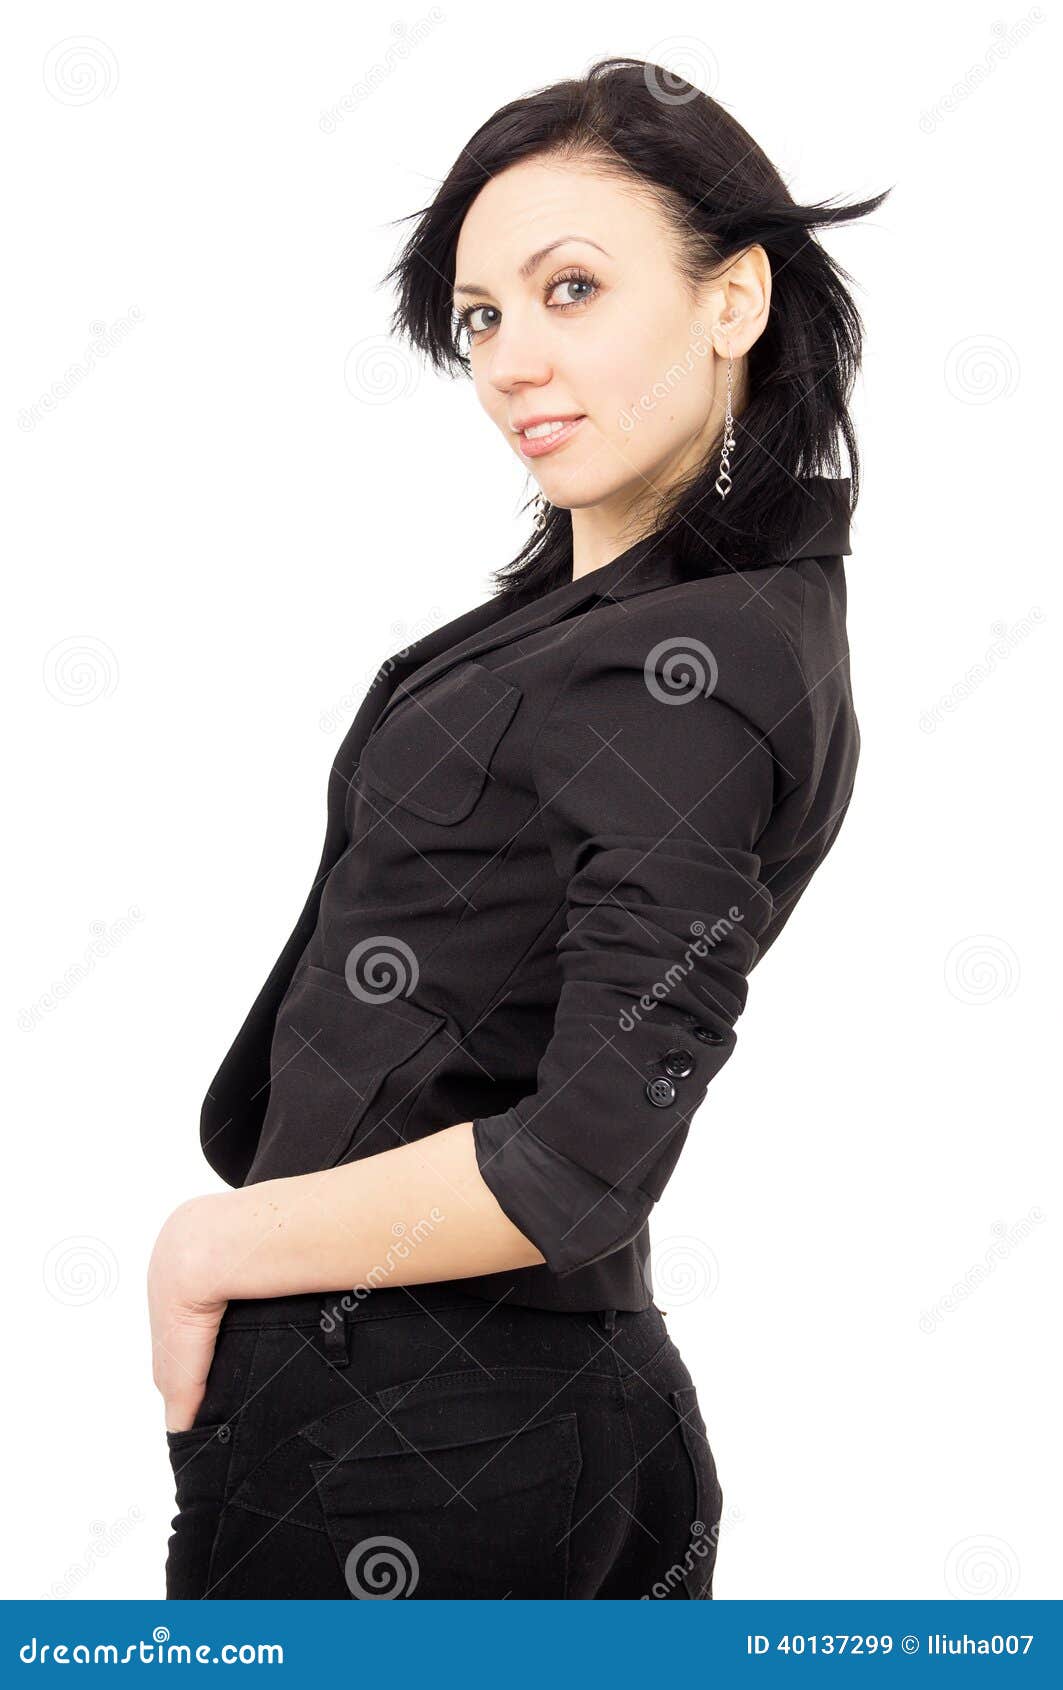 Business girl standing stock image. Image of pants, black - 40137299